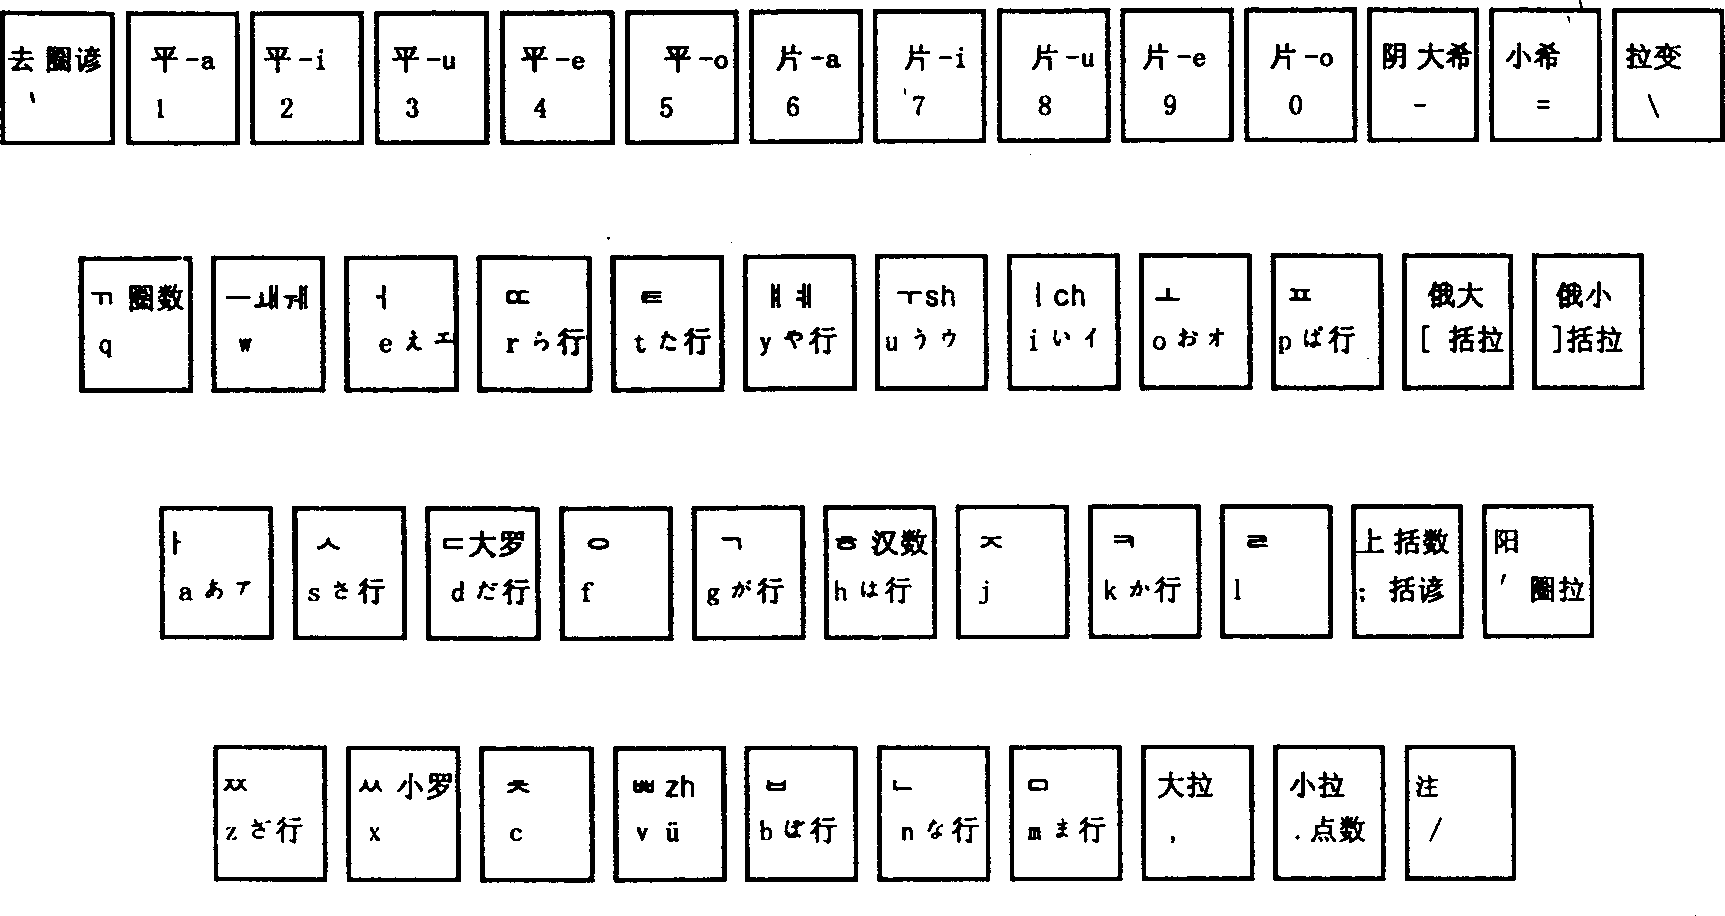 Phonetical shape code inputting method for korea, Japanese and Twin byte symbols